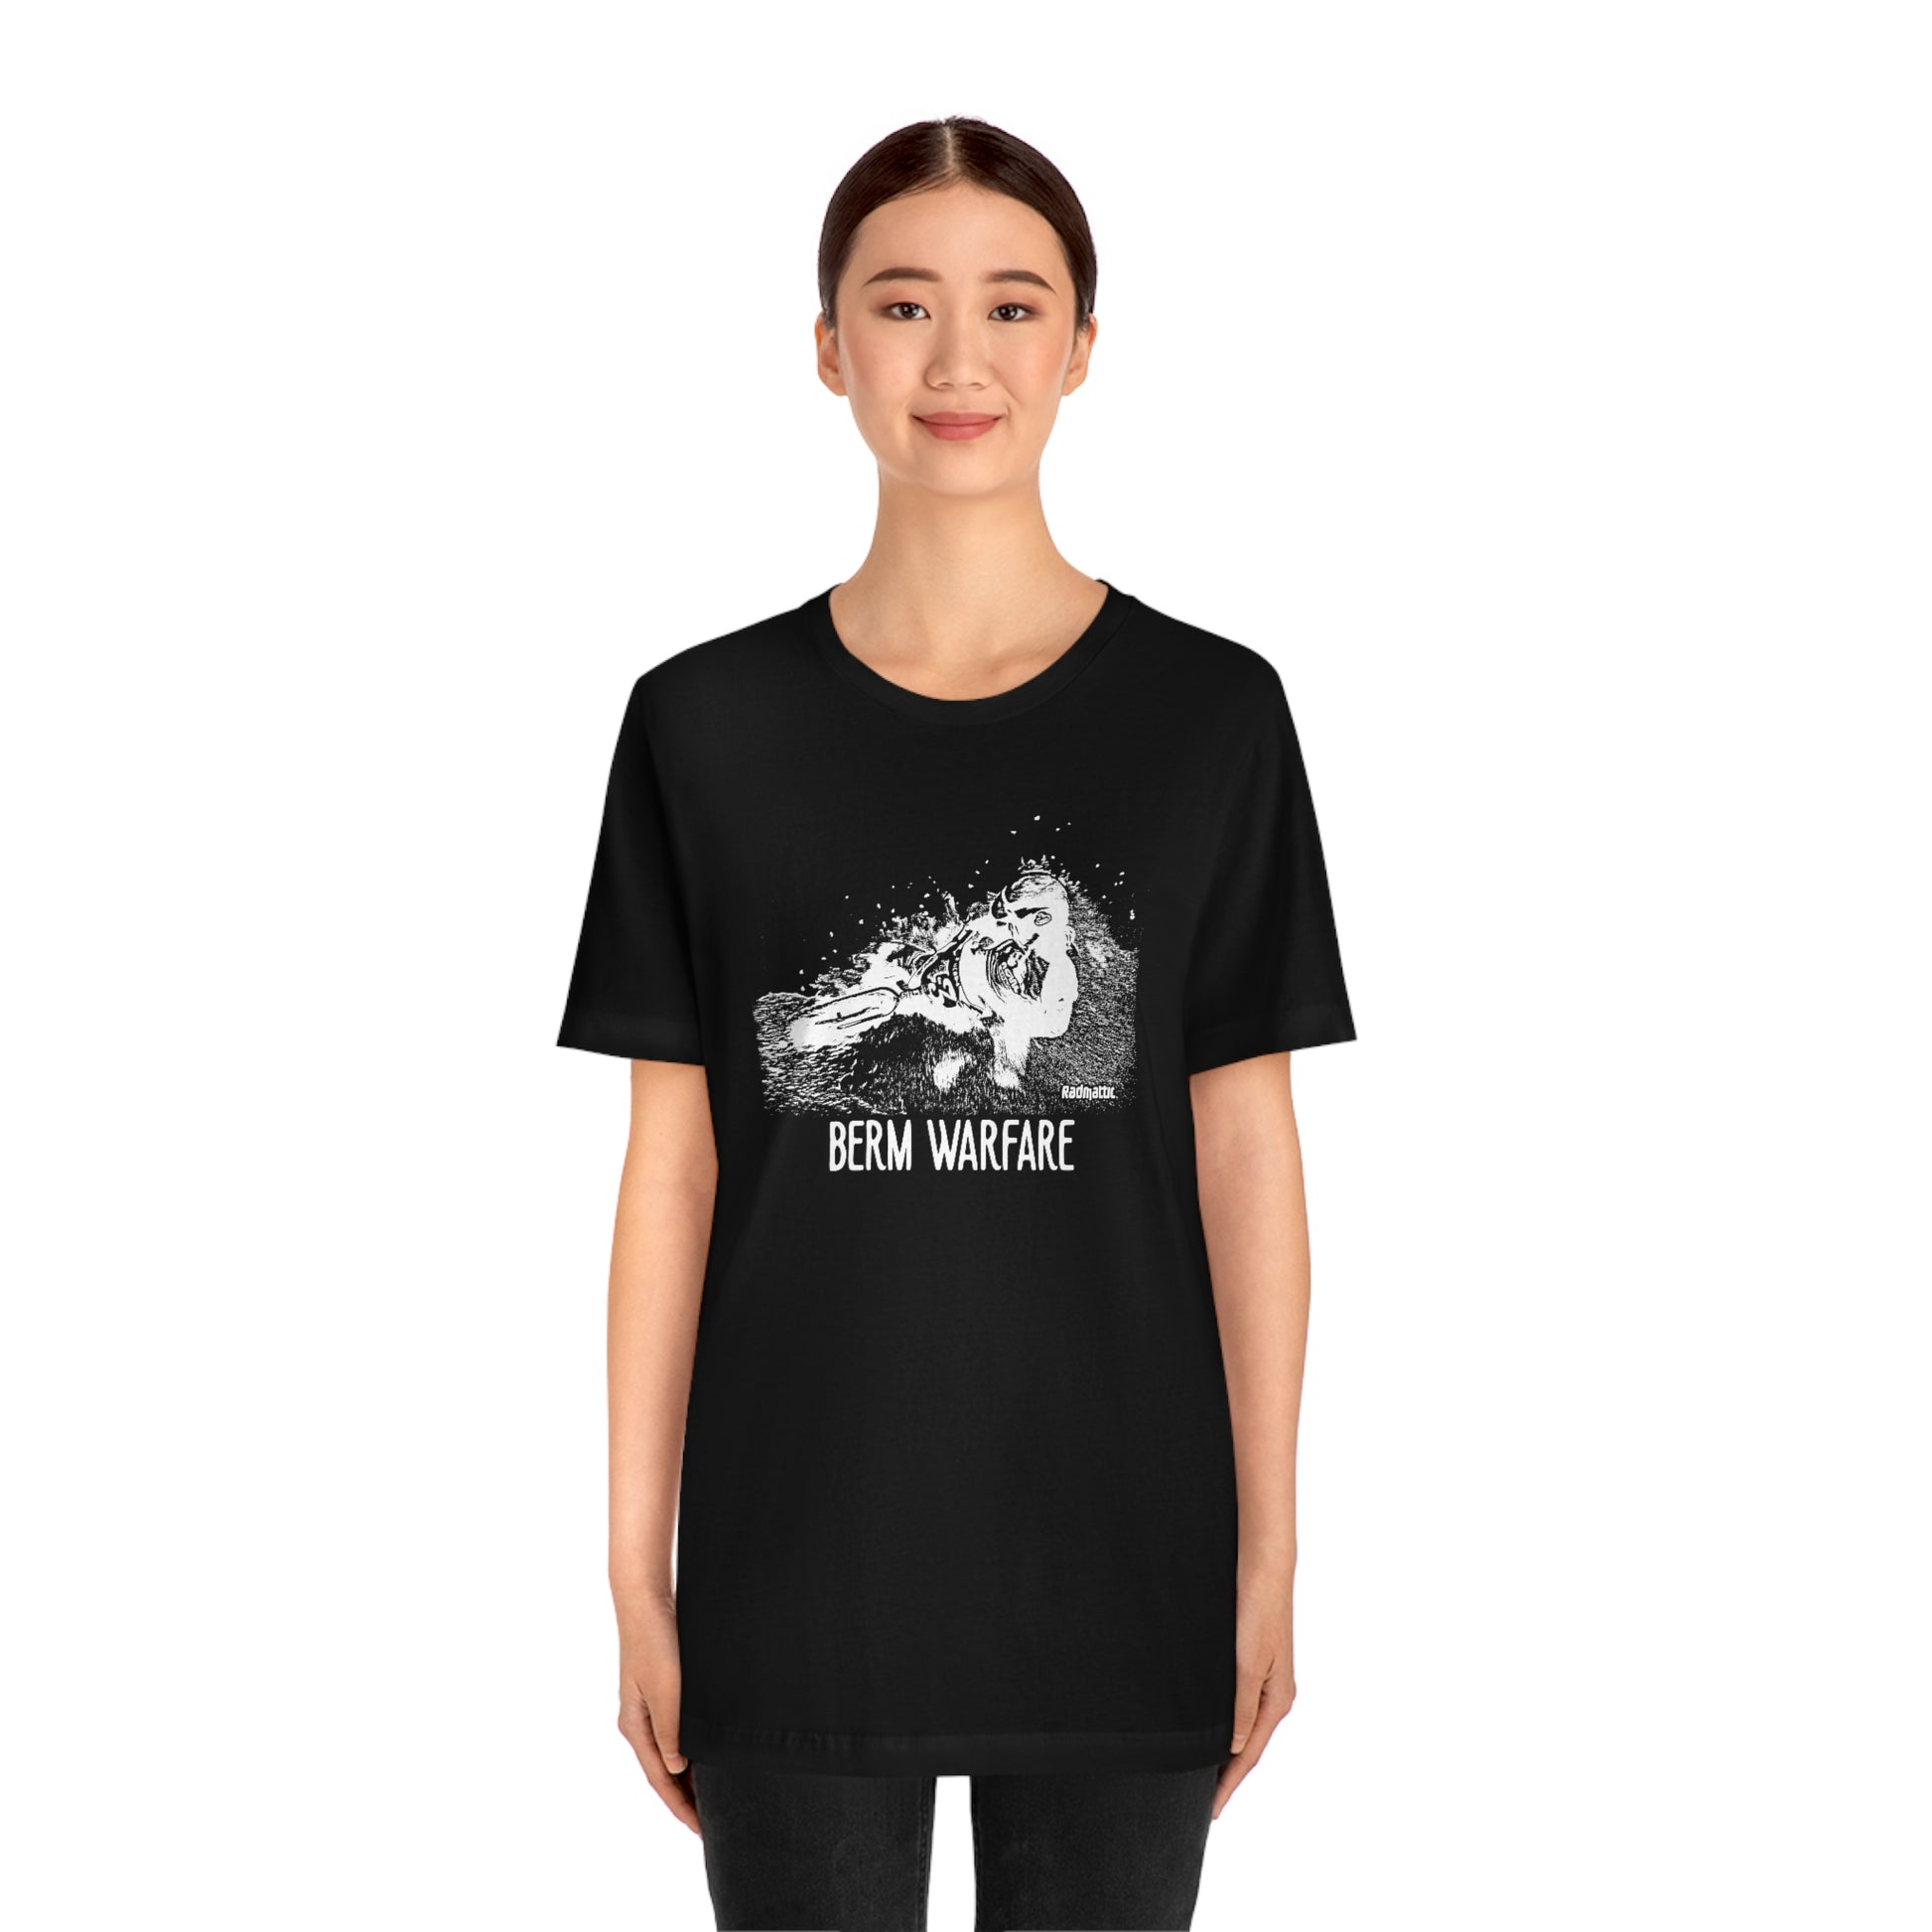 Berm Warfare BMX T-Shirt - Black